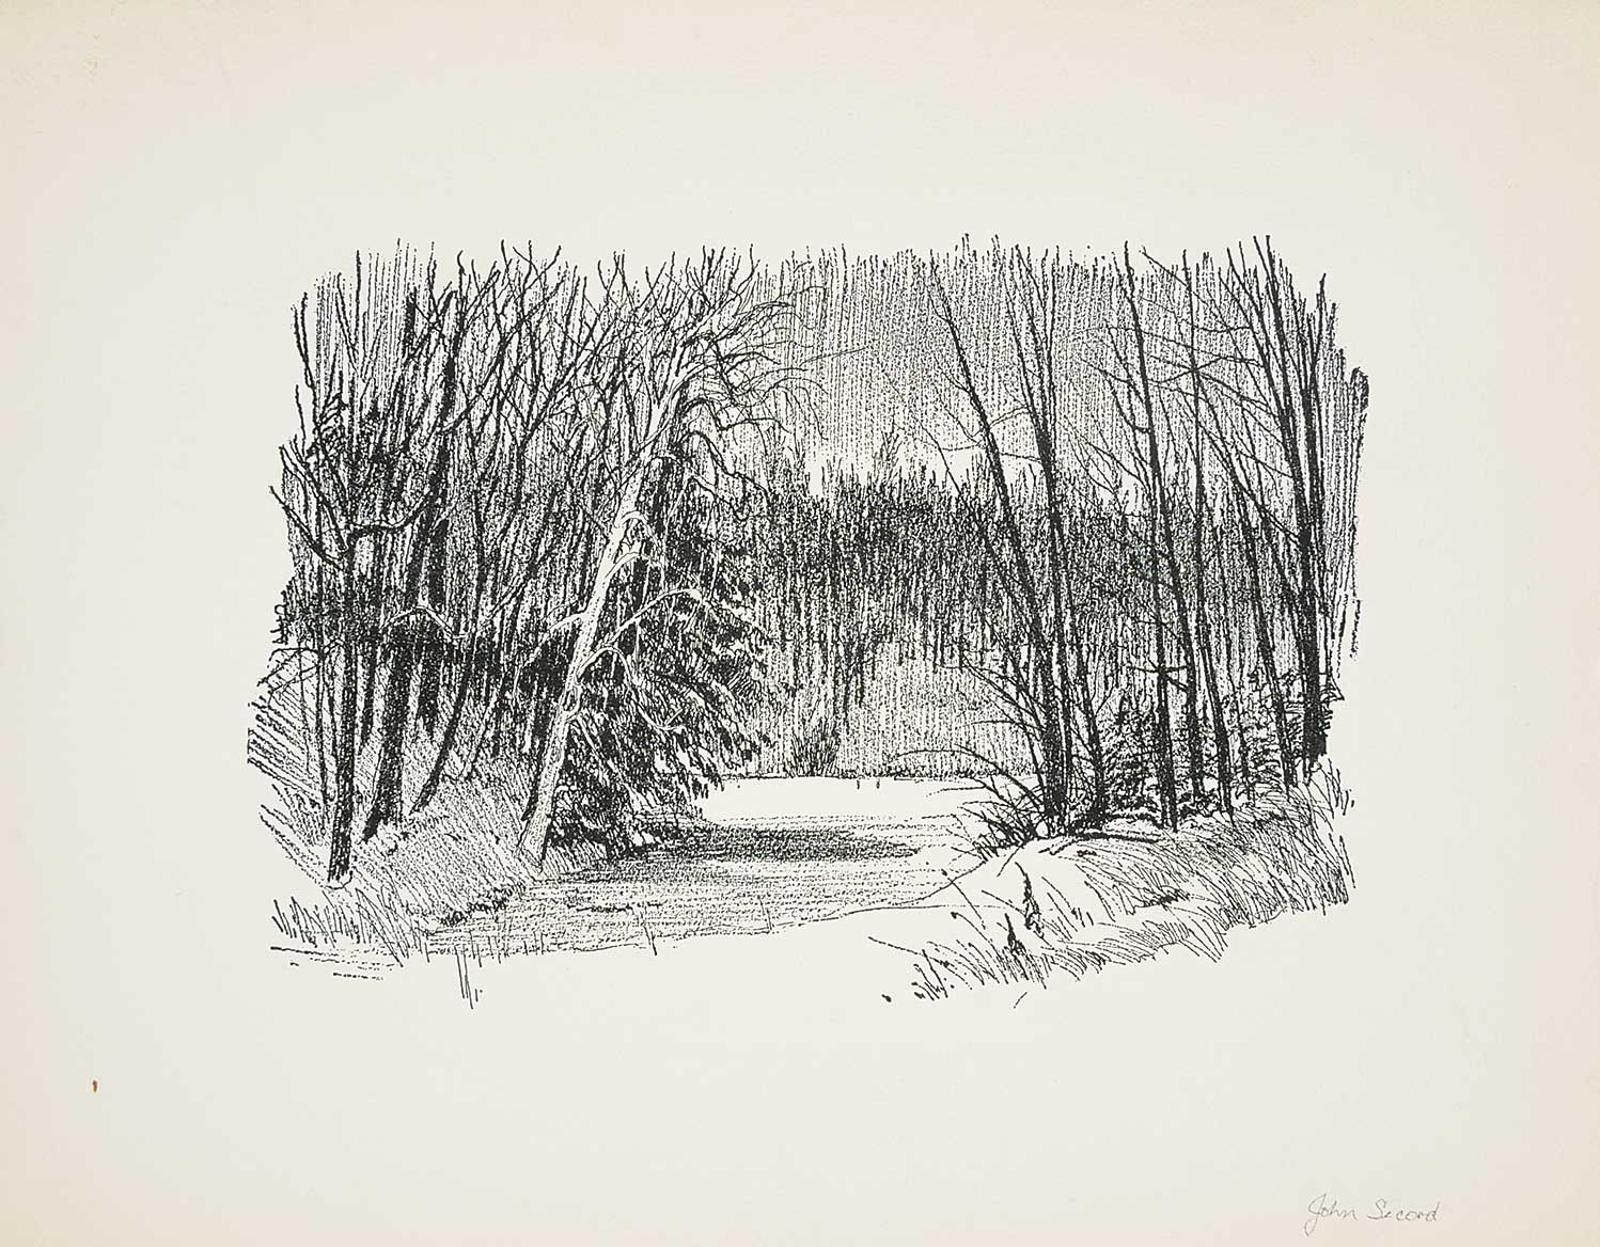 John Everett Secord (1908-1996) - Untitled - Through the Trees